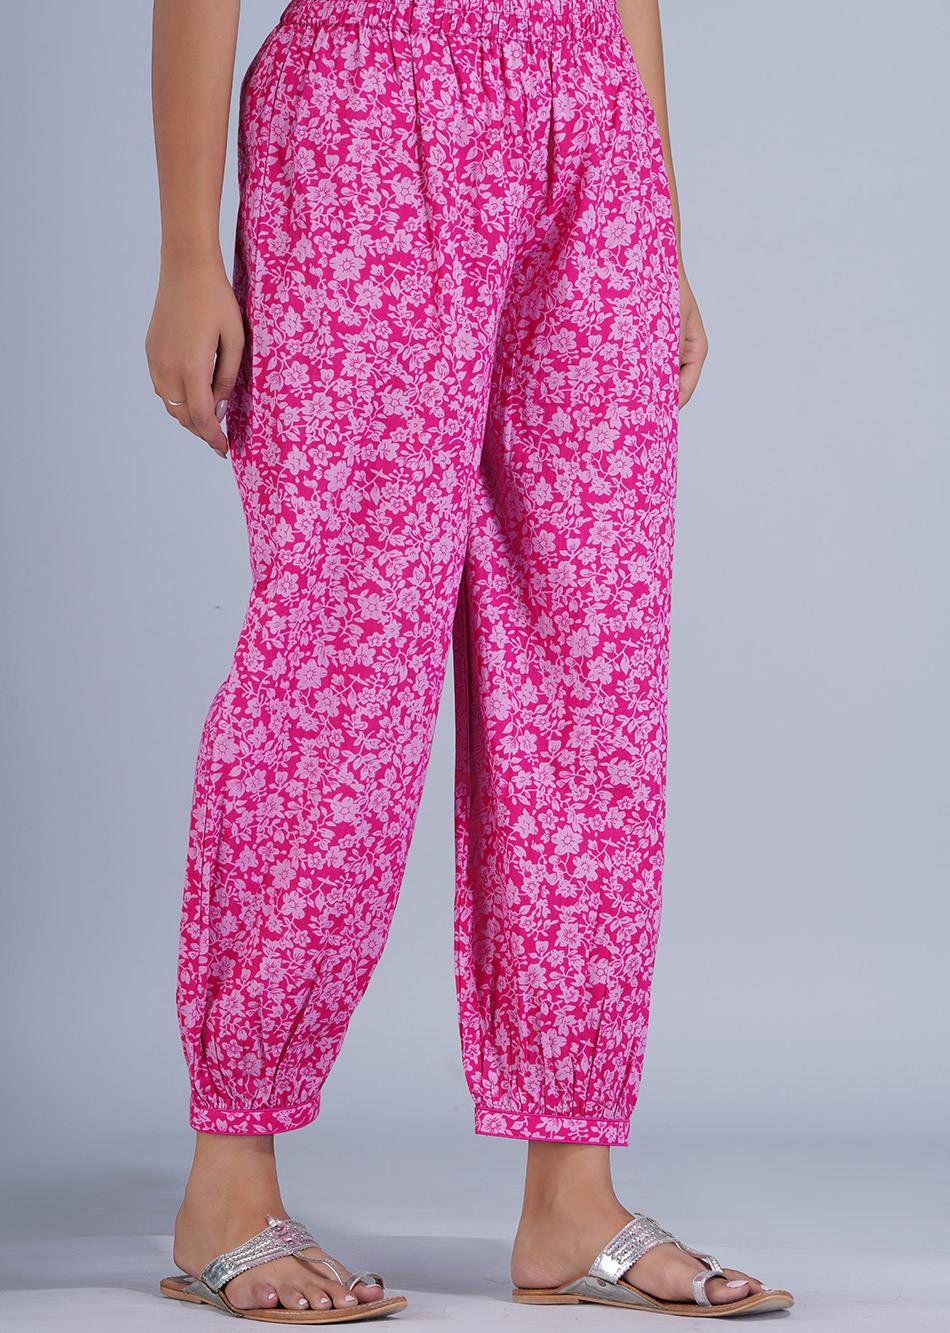 Printed Pink Afghani Pants By Jovi Fashion